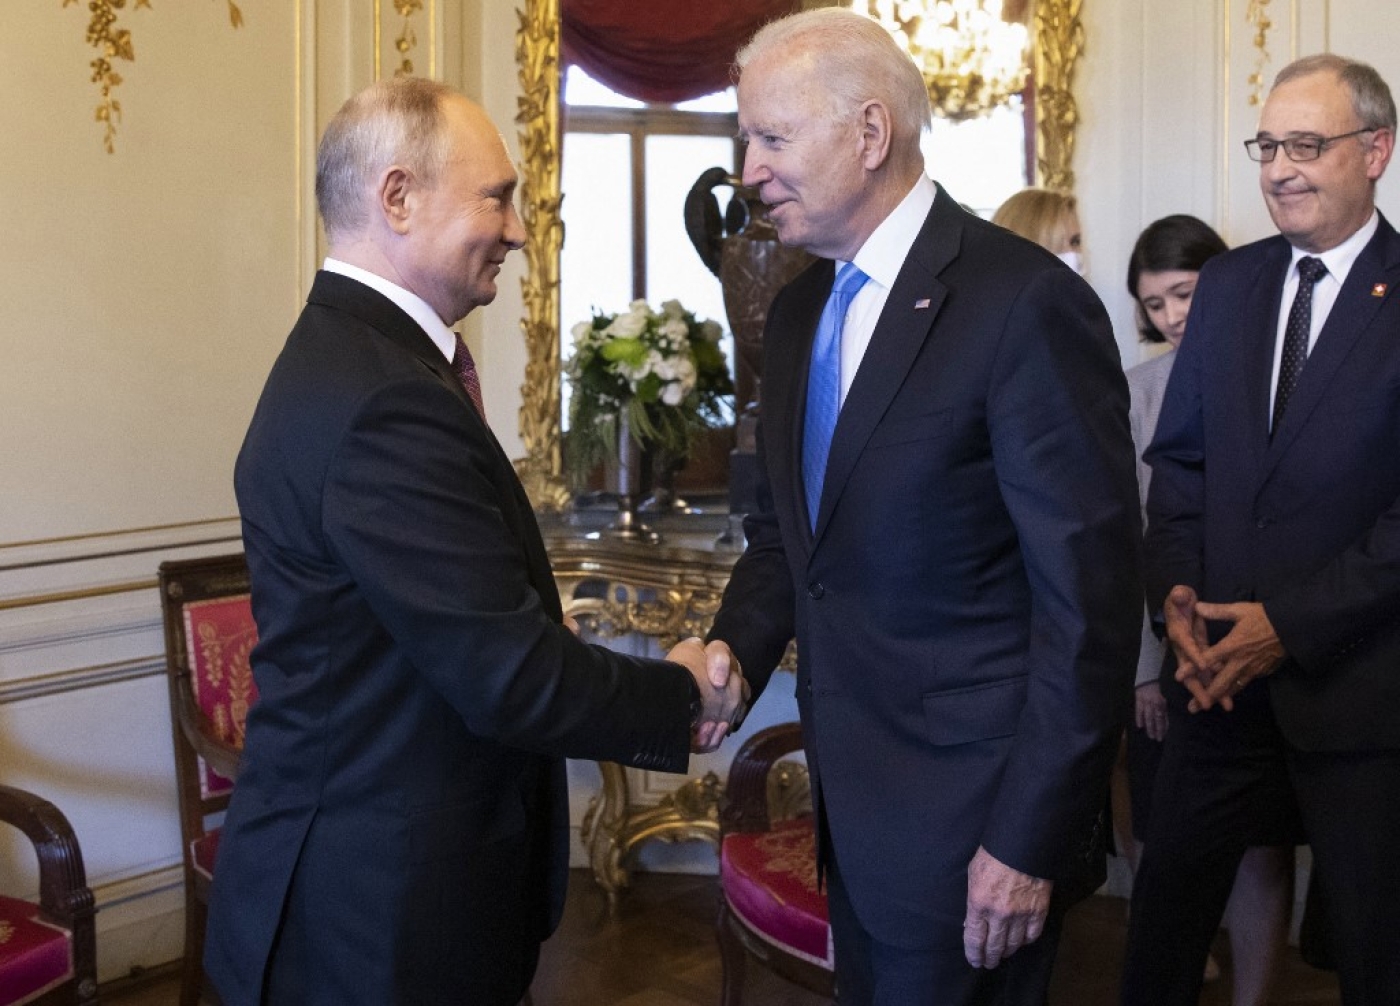 US President Joe Biden shakes hands with Russian President Vladimir Putin prior to the US-Russia summit in Geneva.